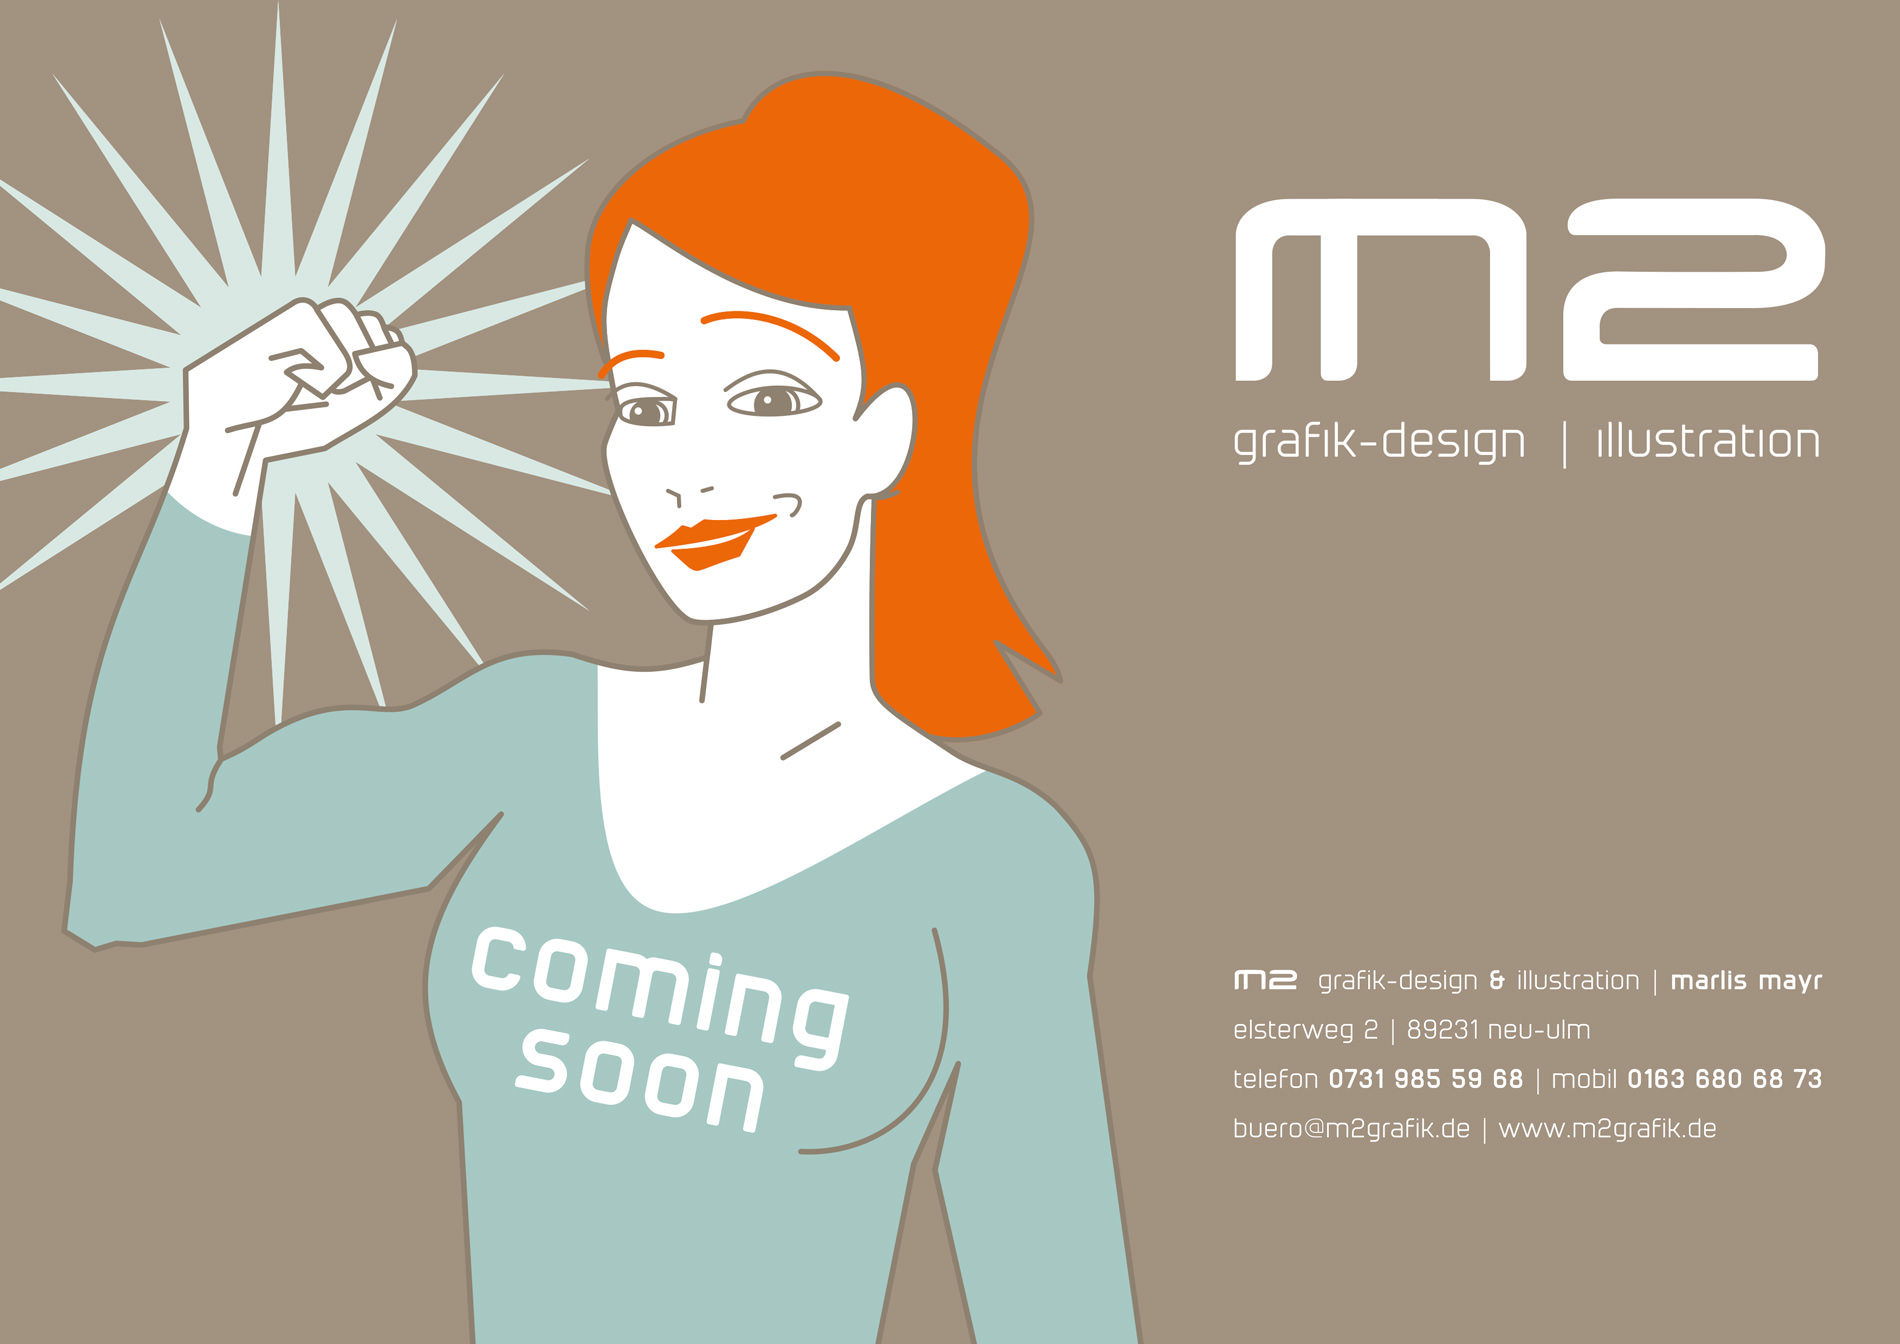 m2grafik - büro für grafik-design & illustration, Marlis Mayr, Elsterweg 2, 89231 Neu-Ulm, Mobil: 0163 68 06 873, Telefon: 0731 98 55 968, Email: buero@m2grafik.de